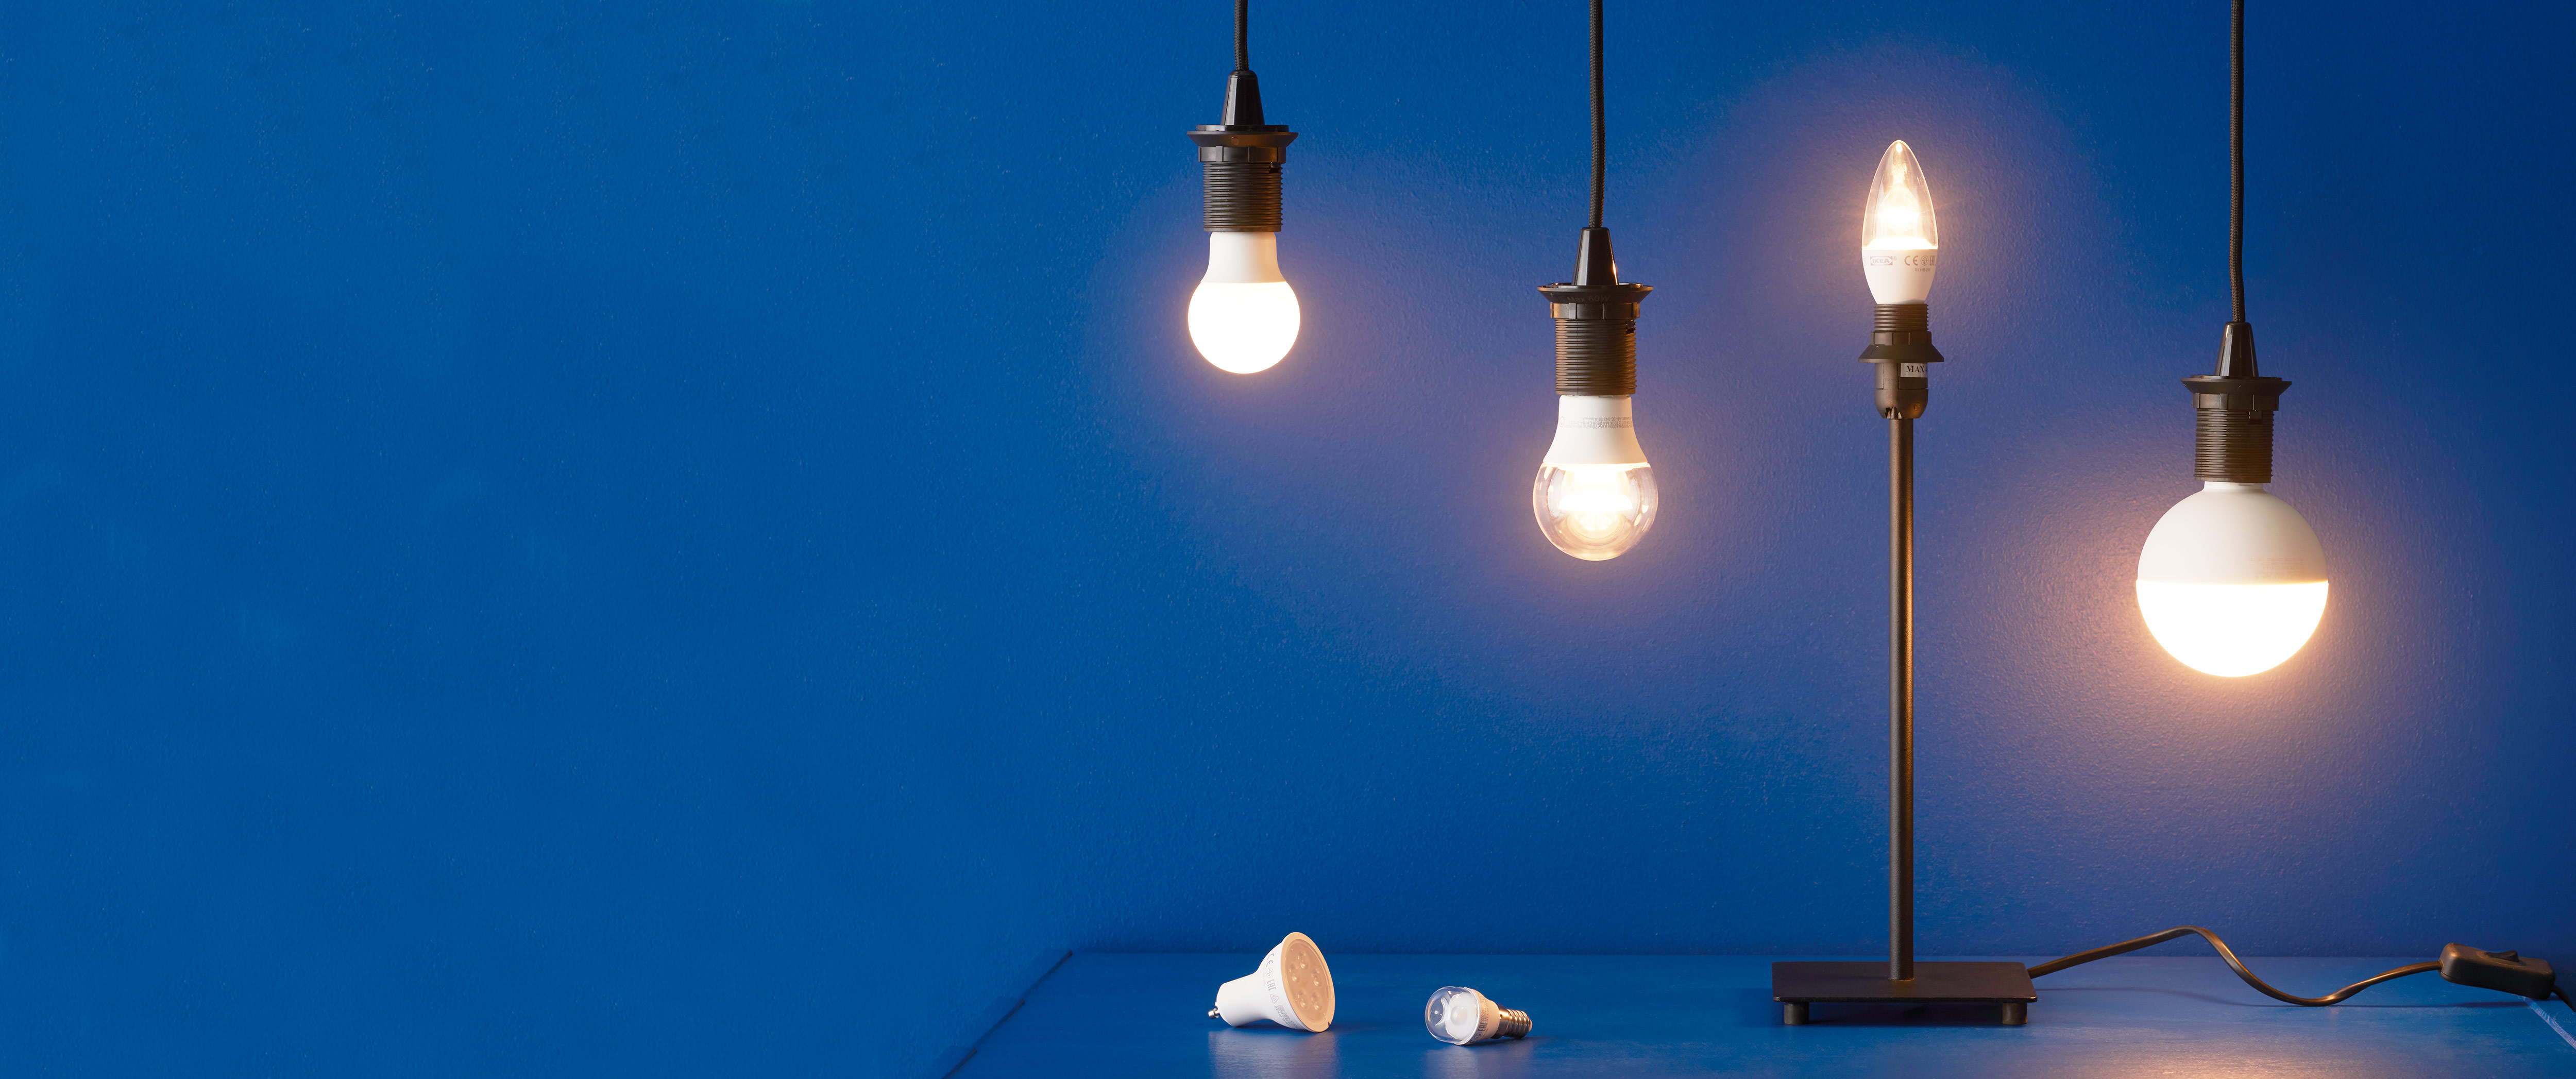 LED-Lampen Test: Ikea-Produkt schnitt am besten ab - Detail - Produktetests - Tests - saldo.ch